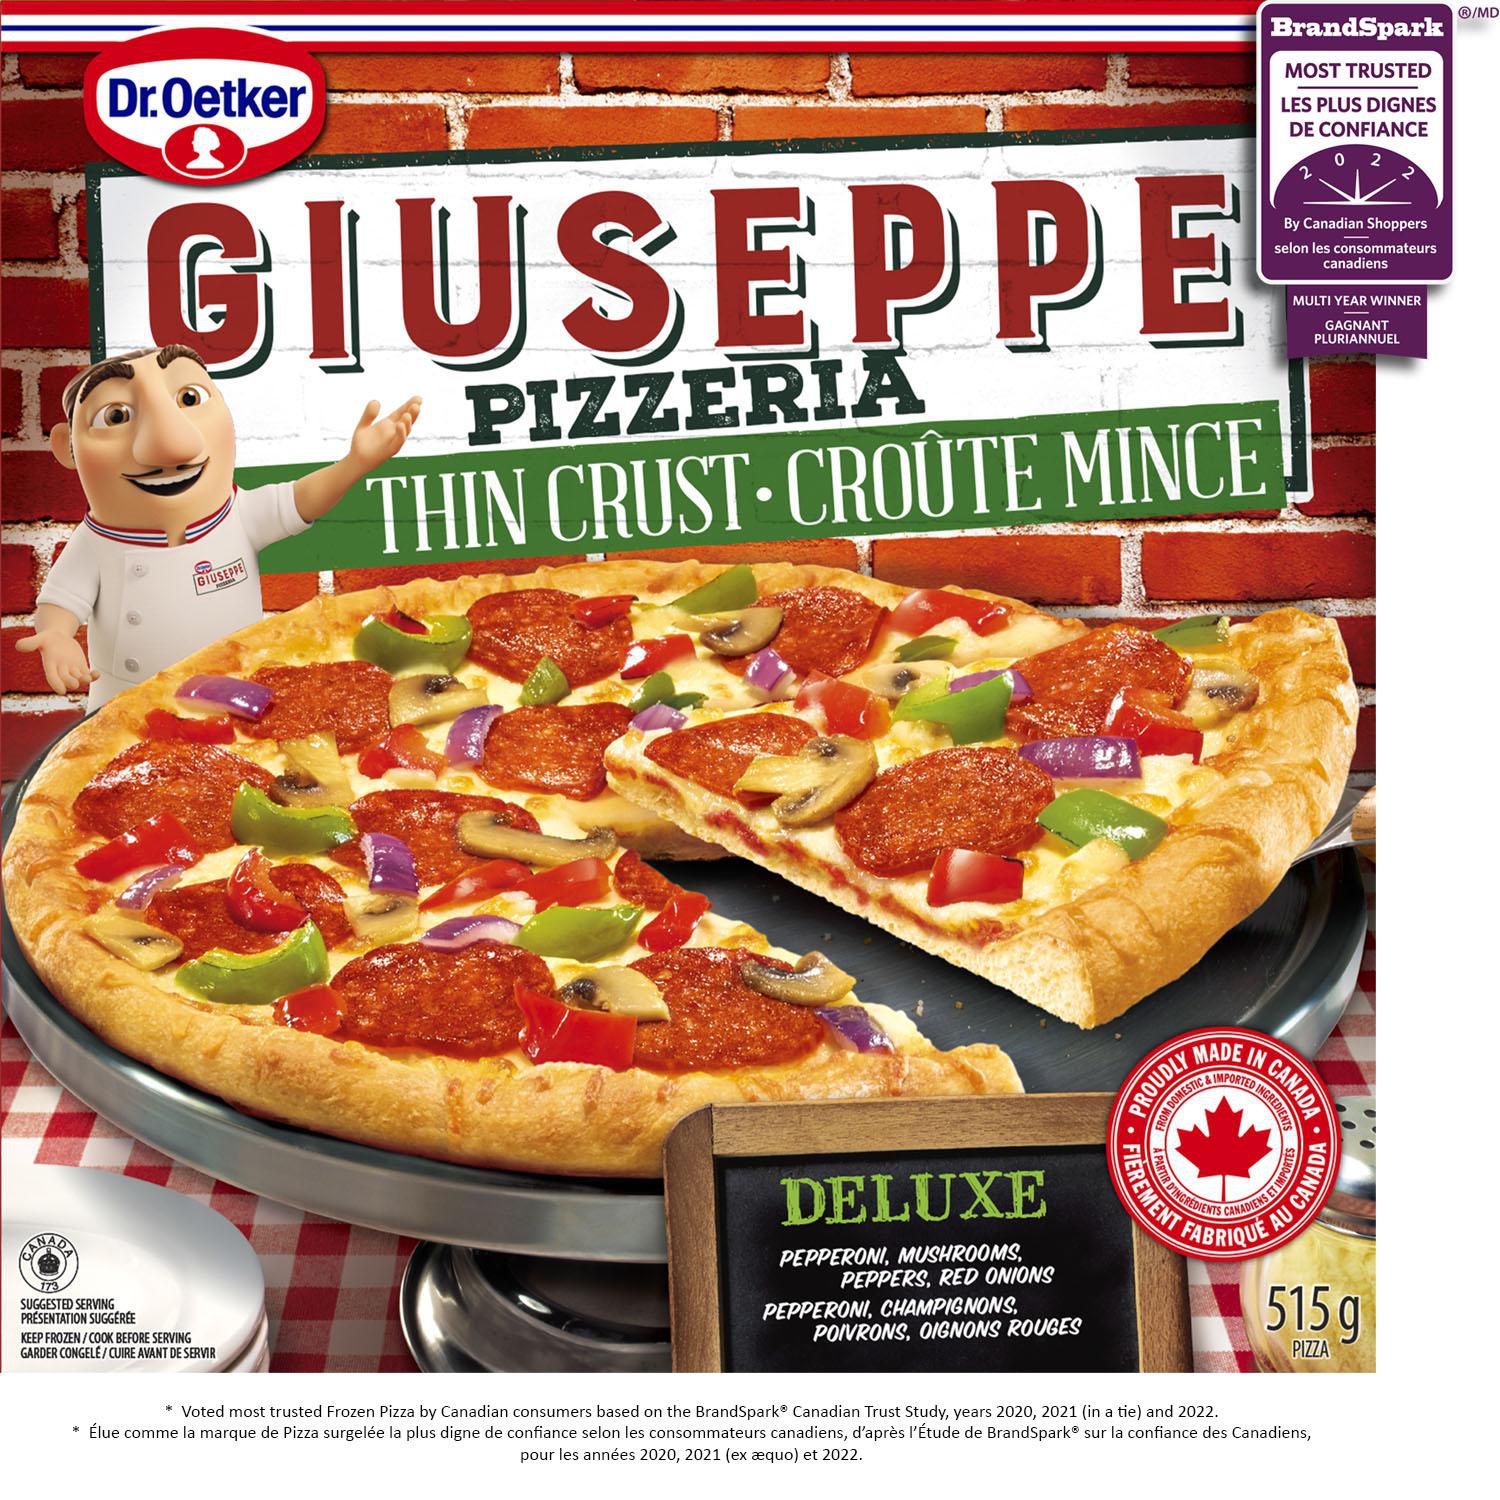 Dr. Oetker Giuseppe Pizzeria Thin Crust Deluxe Pizza Walmart Canada